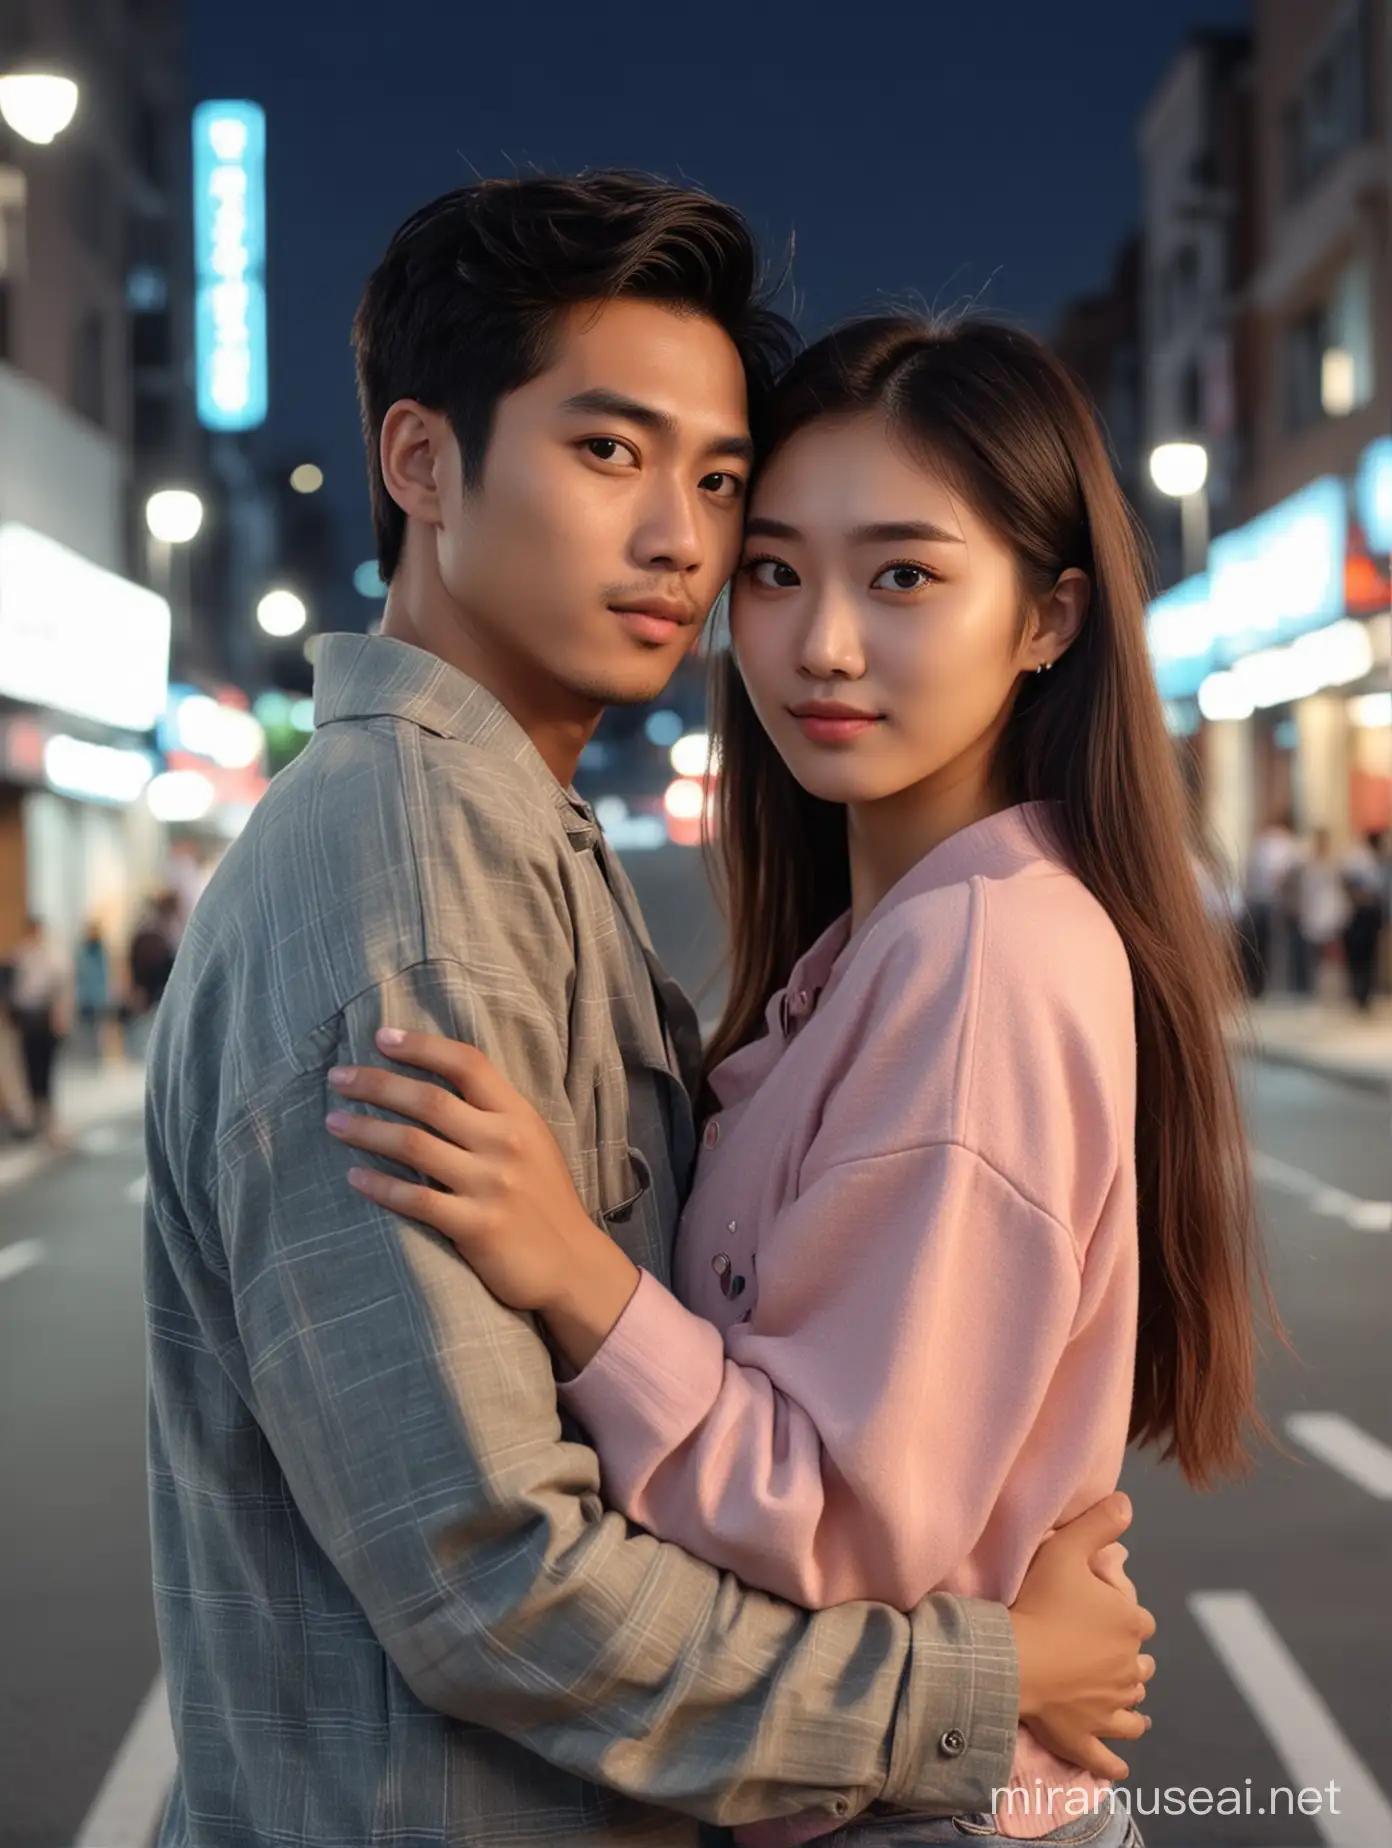 Trendy Indonesian Girl Embracing Man in Korean City Street at Evening